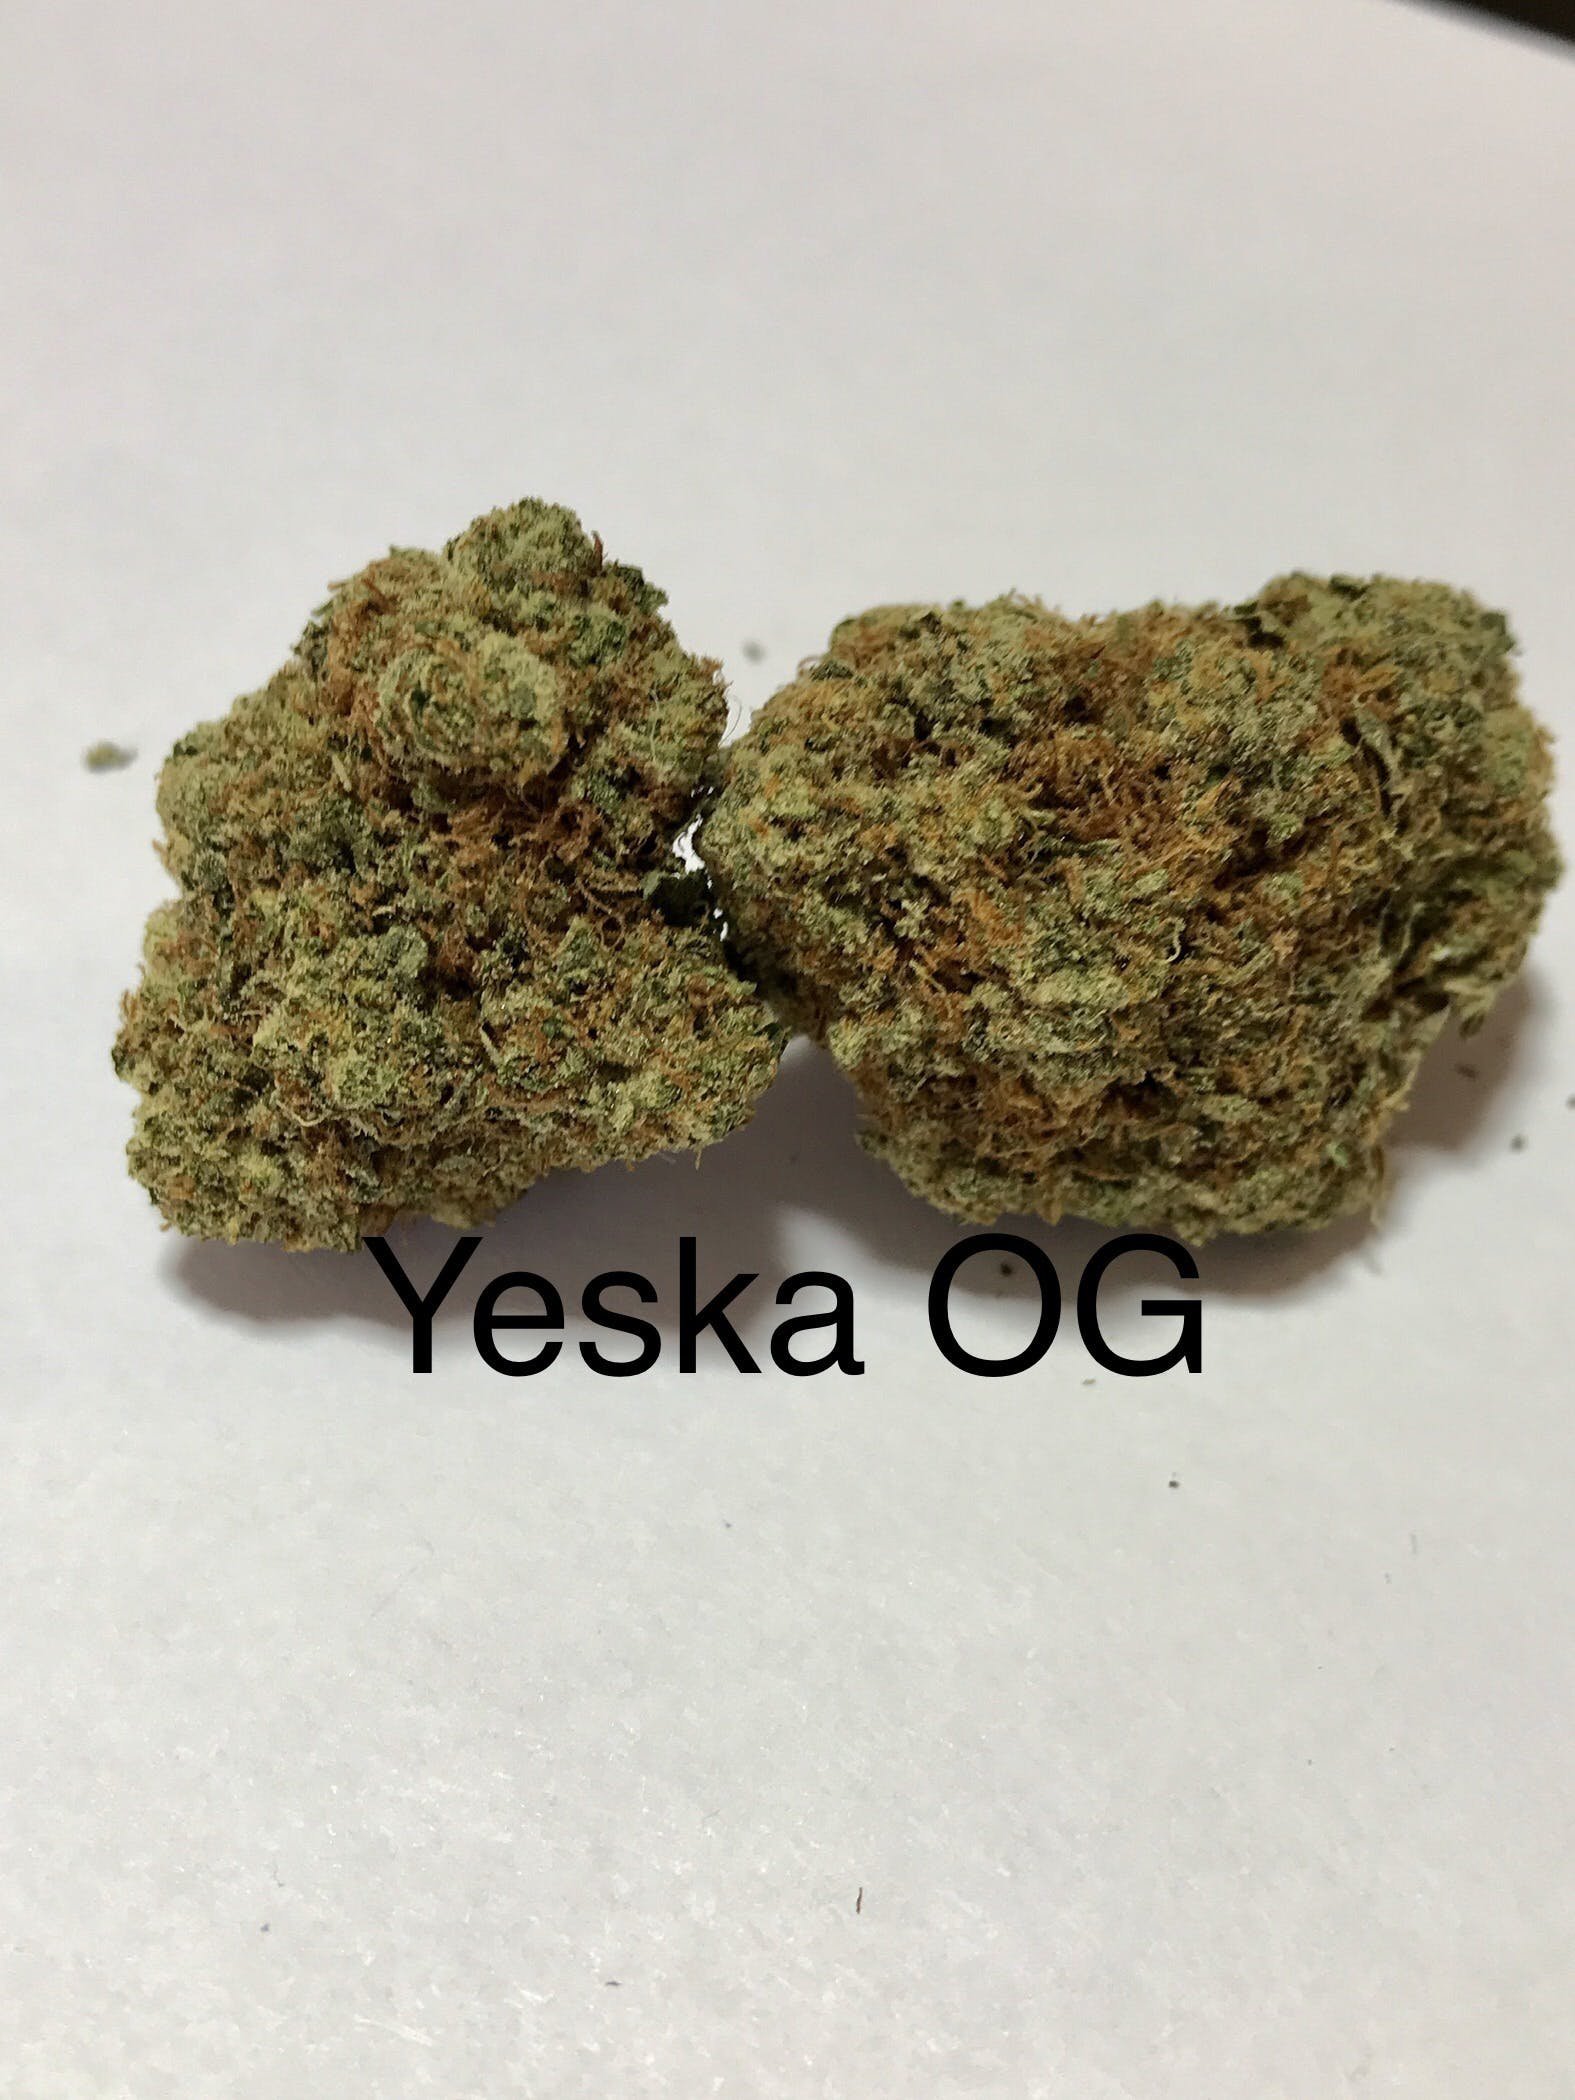 marijuana-dispensaries-924-nw-150th-street-edmond-owasso-organics-yeska-og-bulk-thc-flower